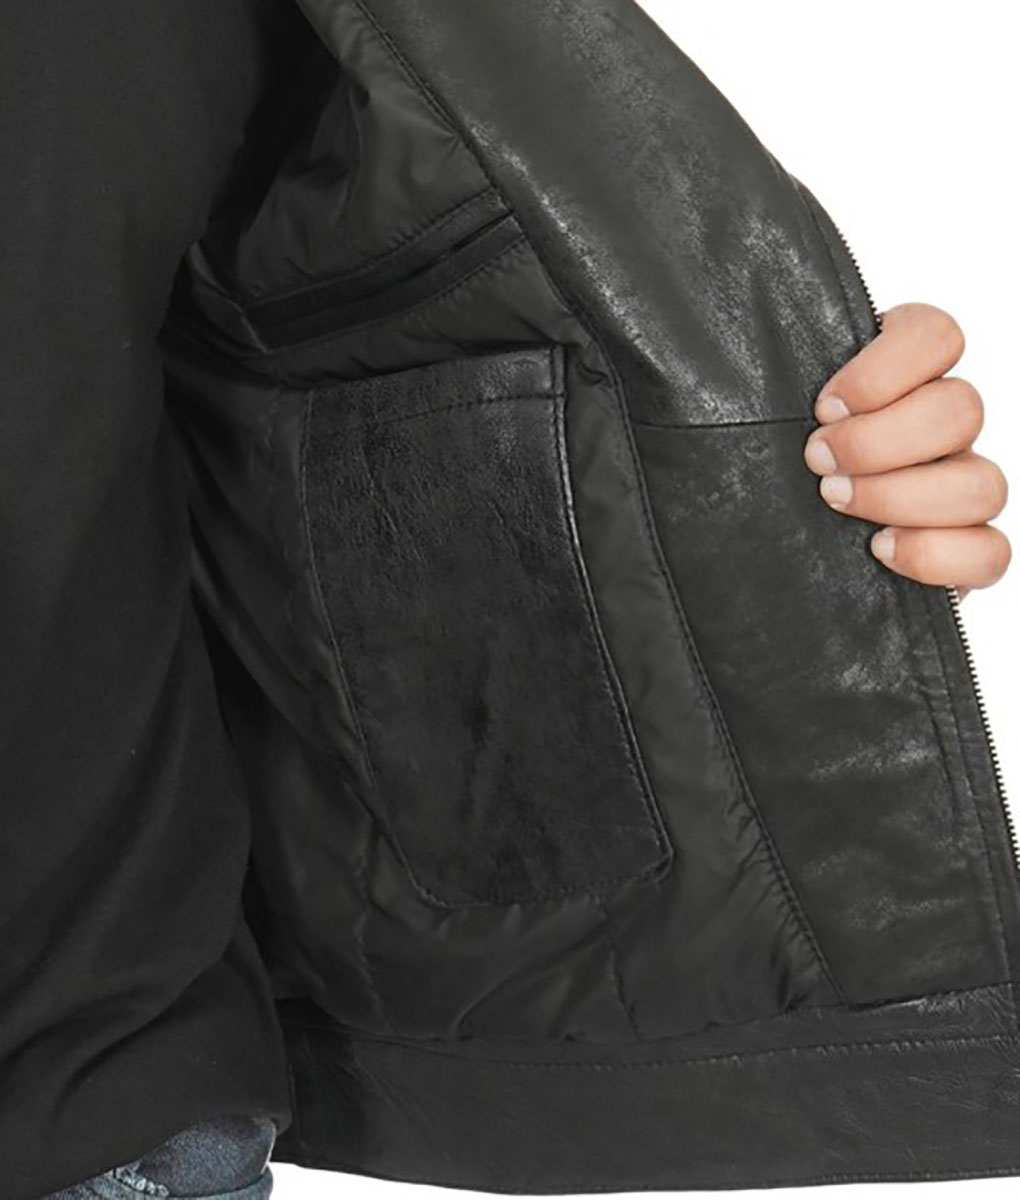 Jake Mens Black Asymmetrical Black Vintage Leather Jacket